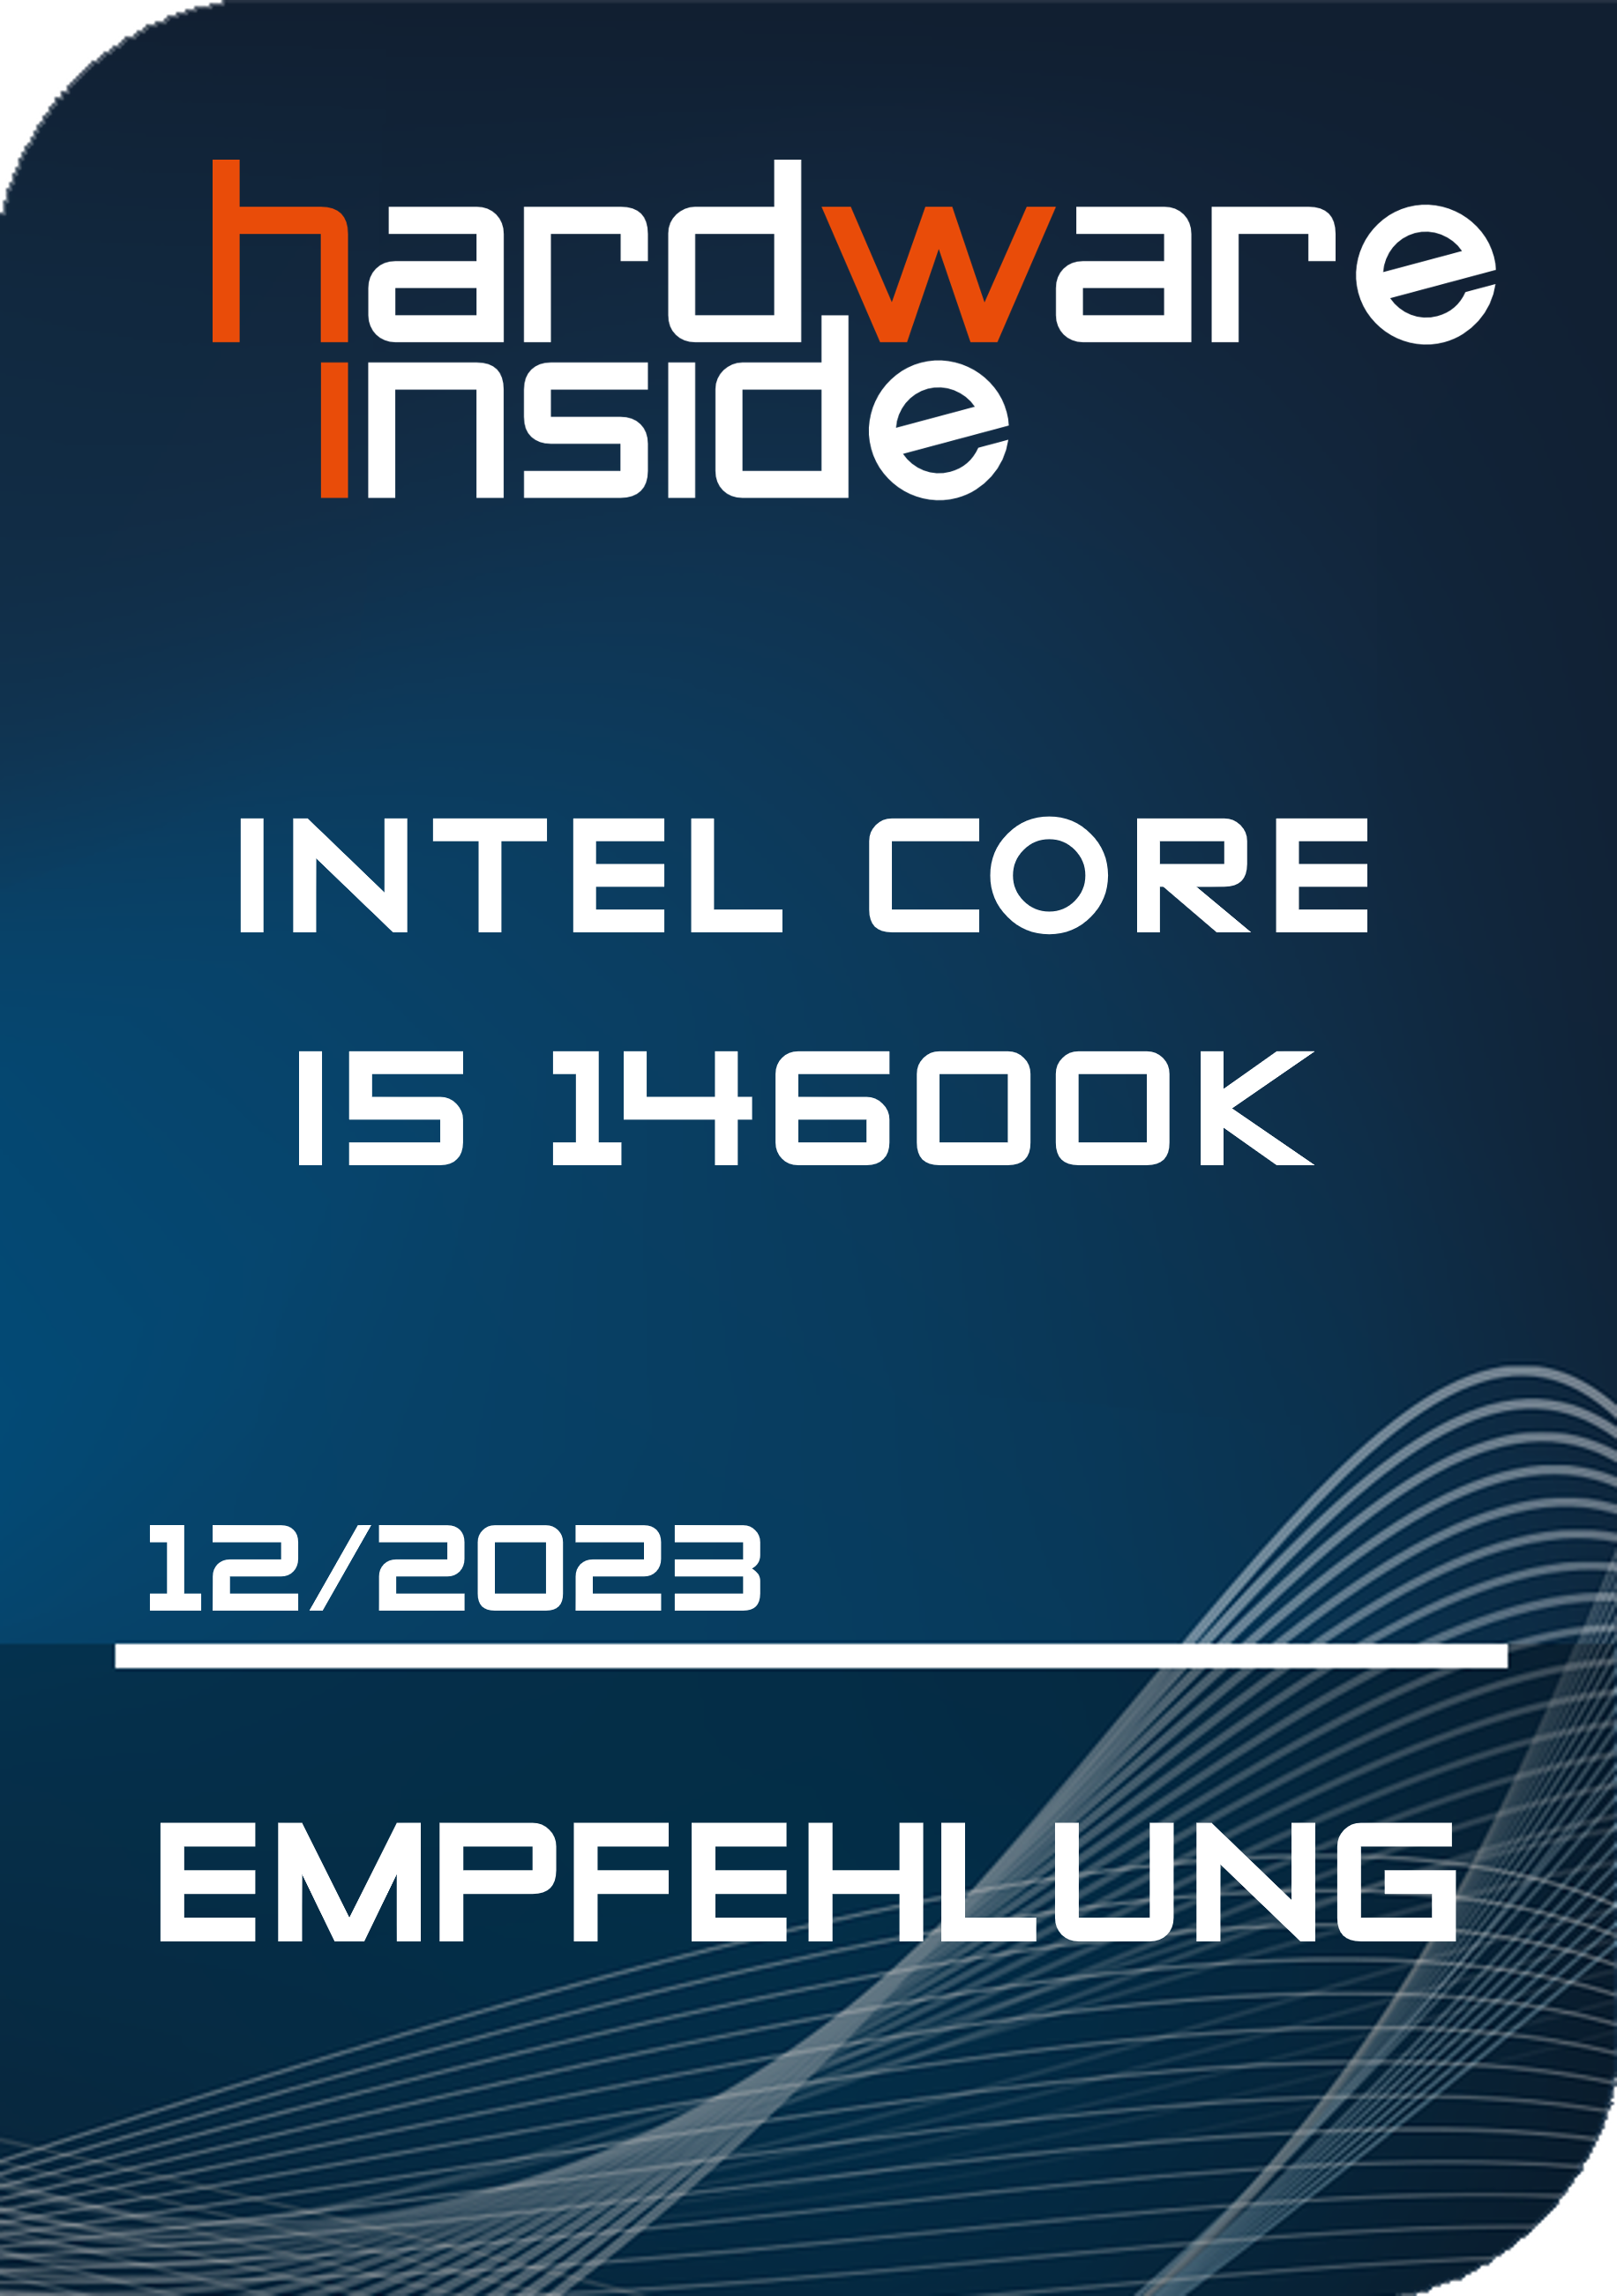 intel-core-i5-14600k-award.png